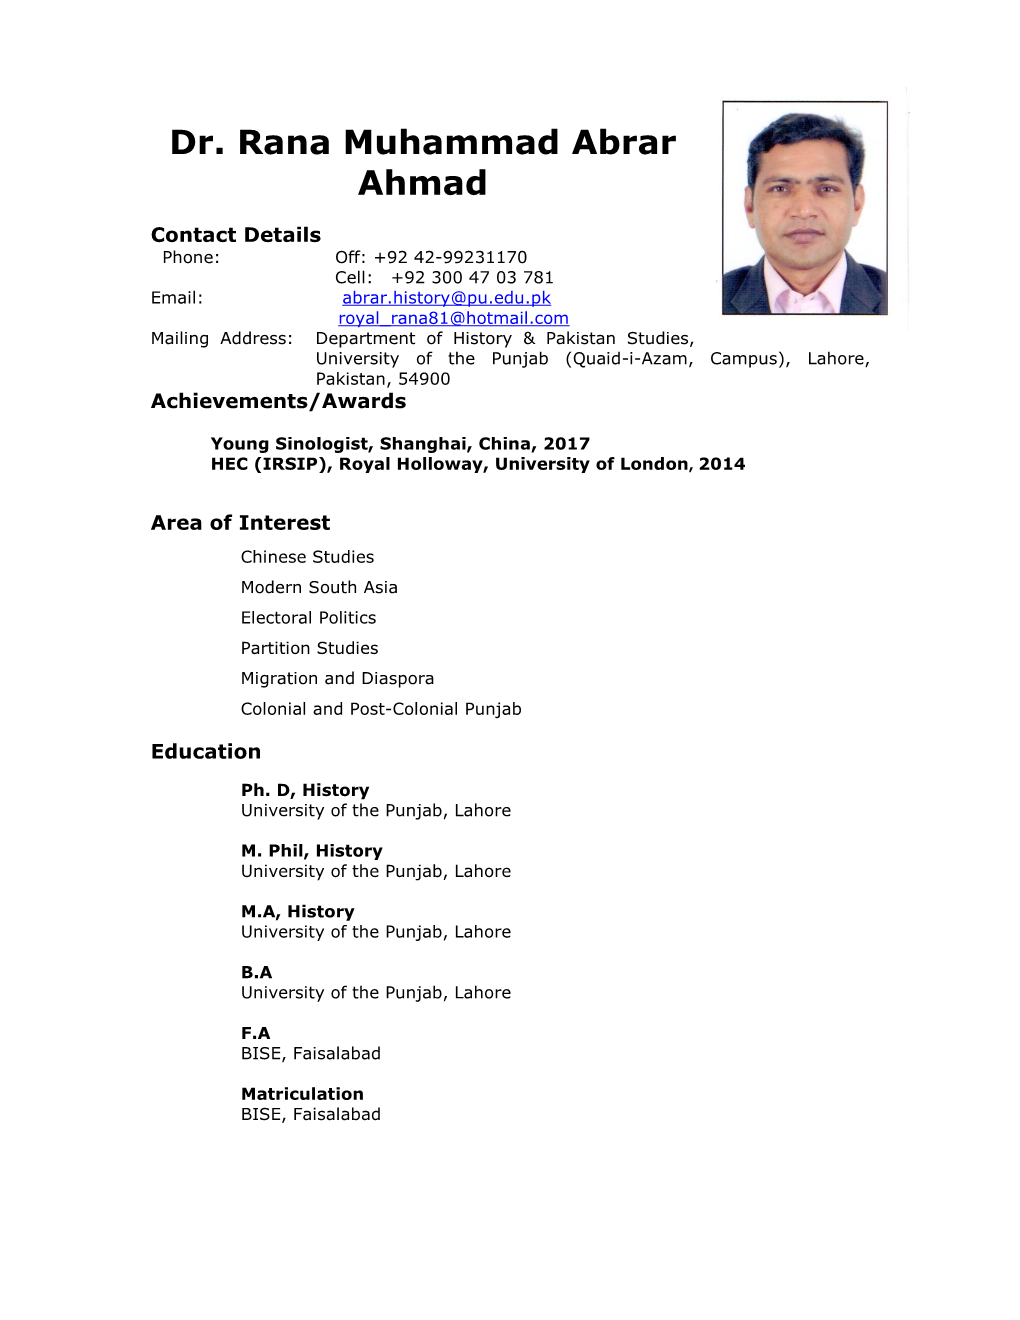 Dr. Rana Muhammad Abrar Ahmad